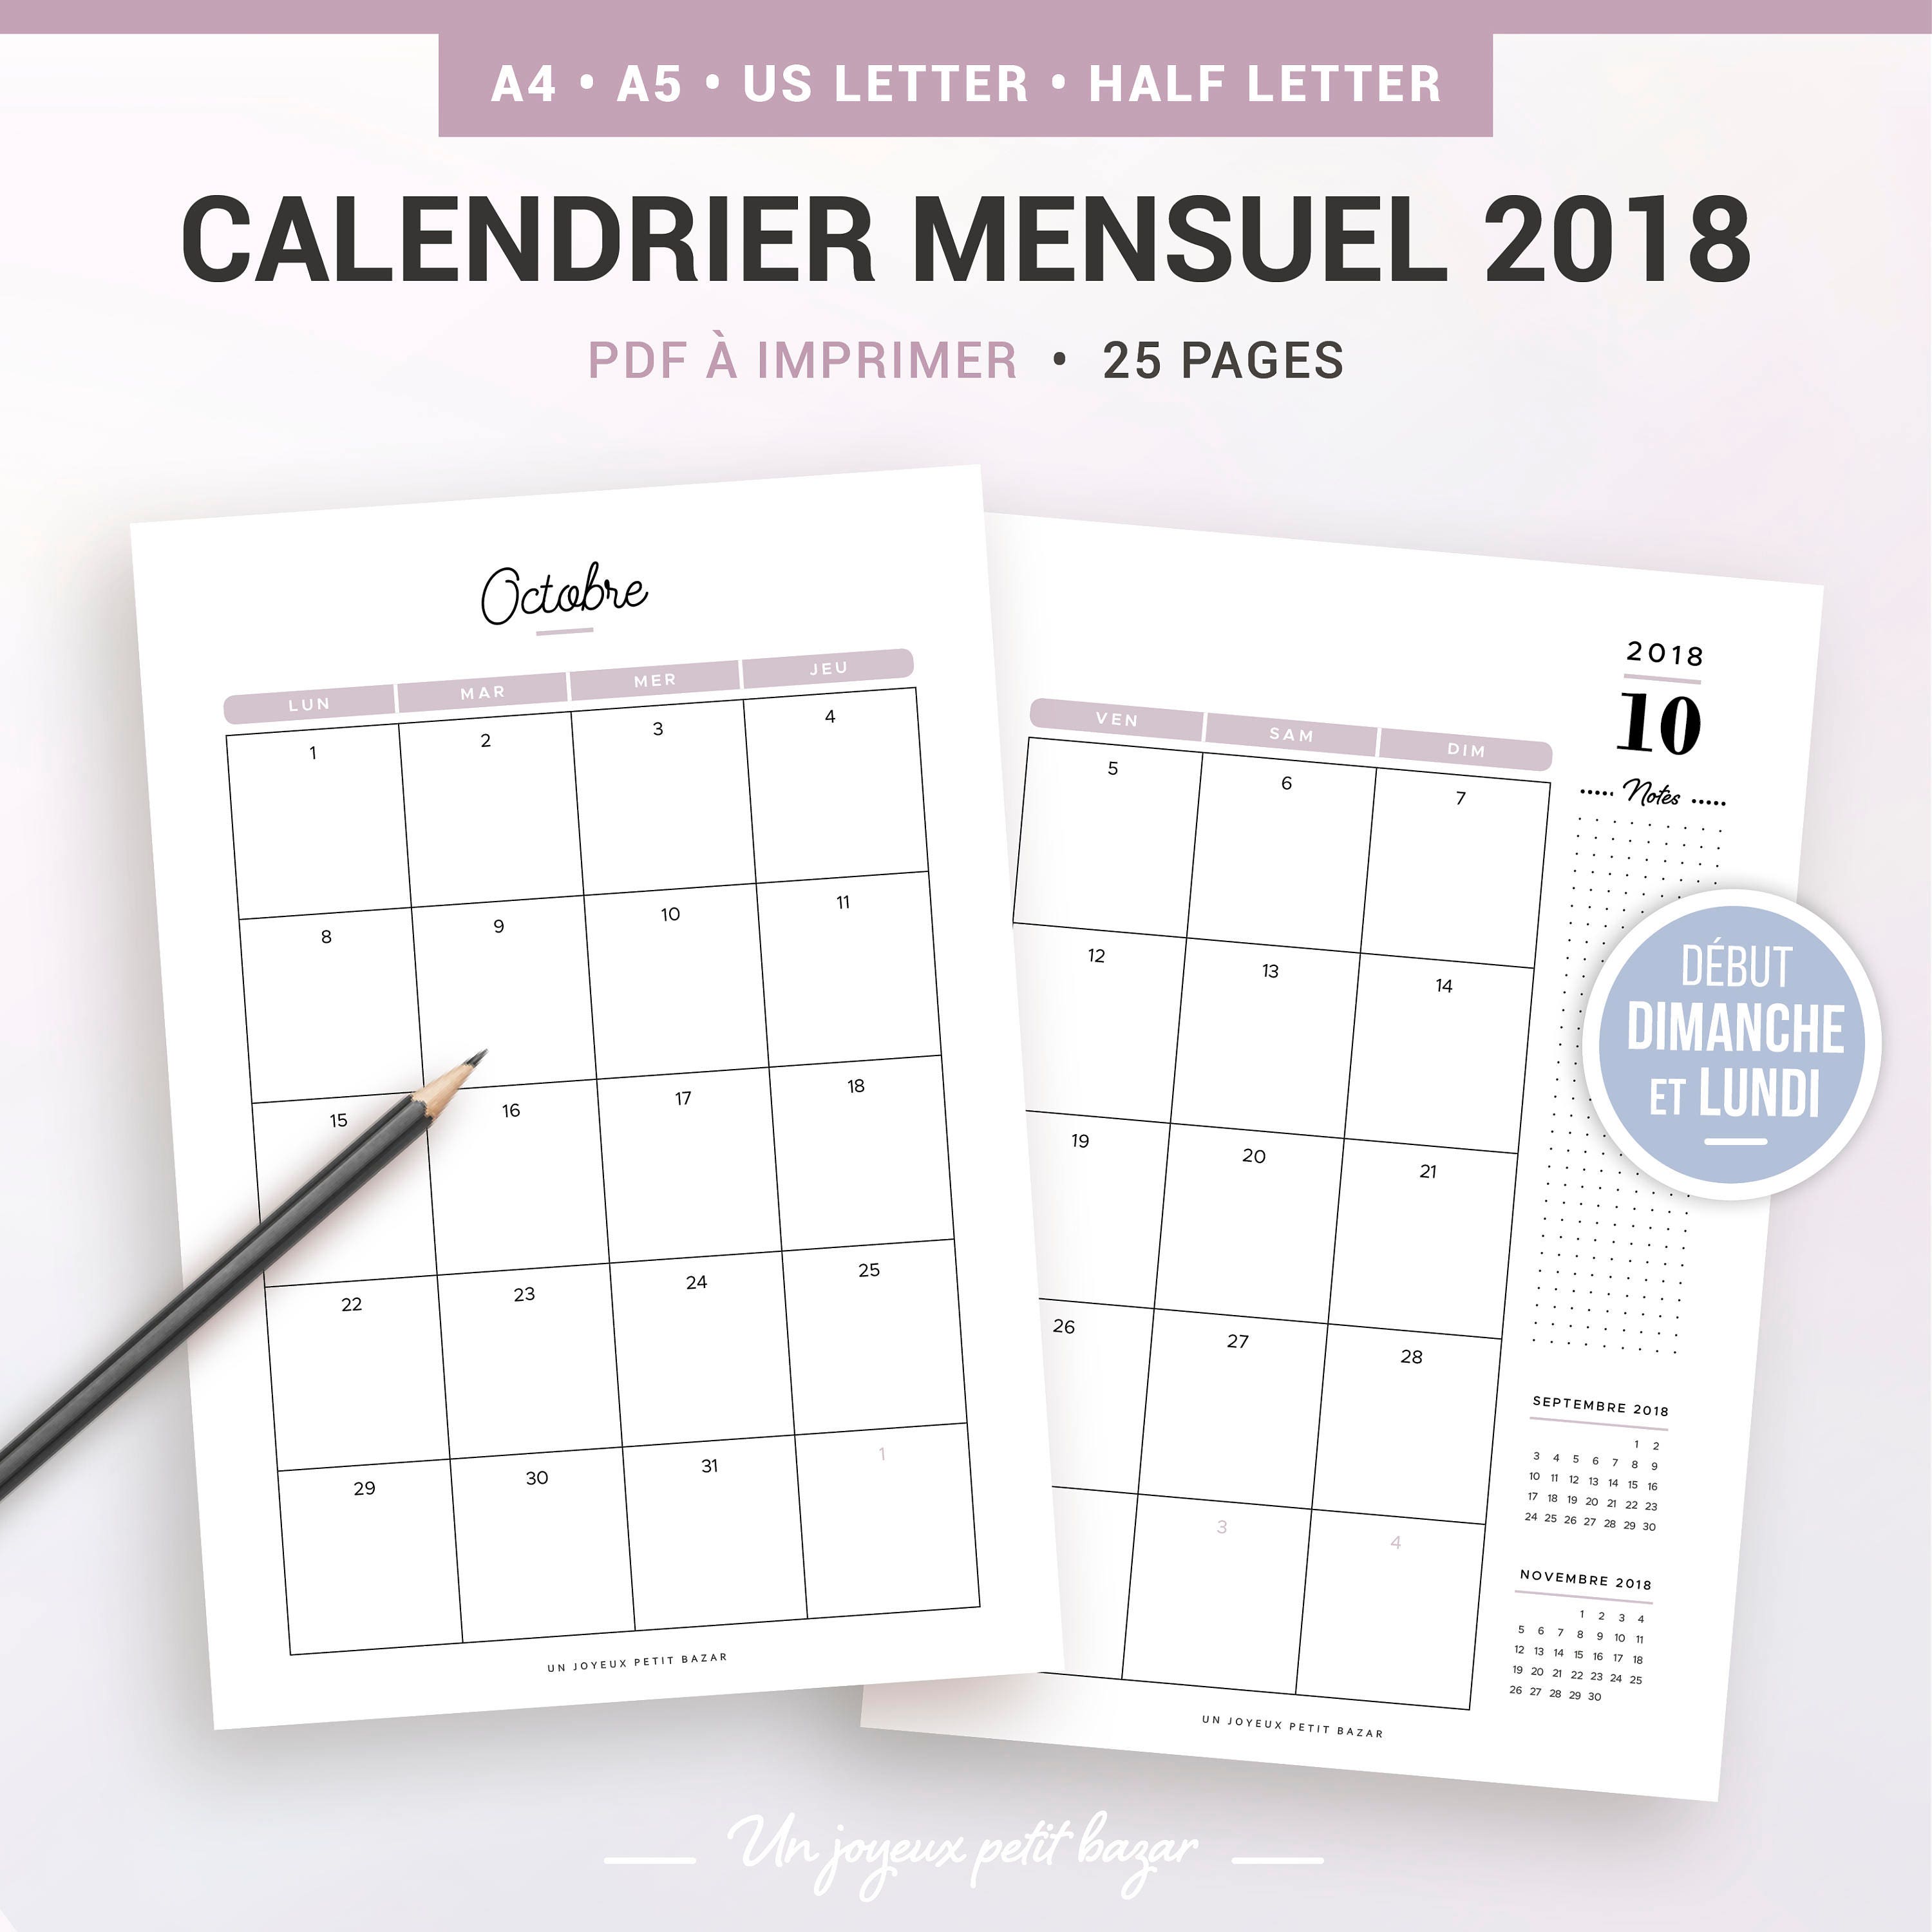 CALENDRIER MENSUEL 2018 à imprimer agenda mensuel 2018